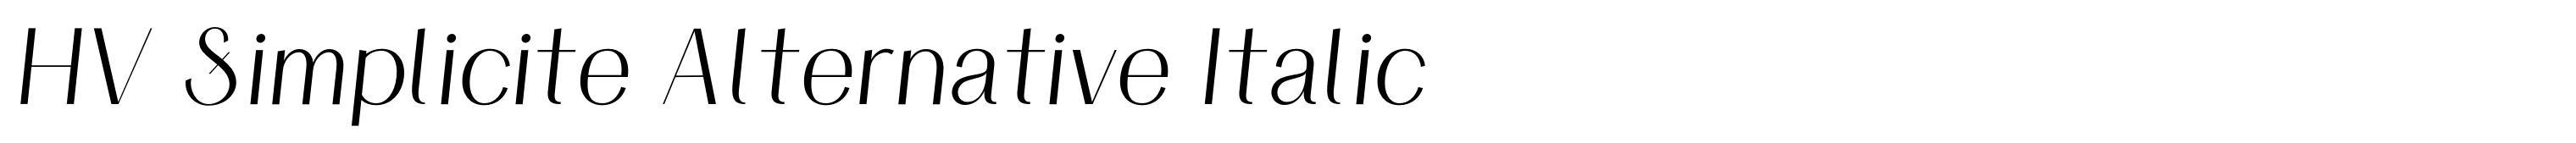 HV Simplicite Alternative Italic